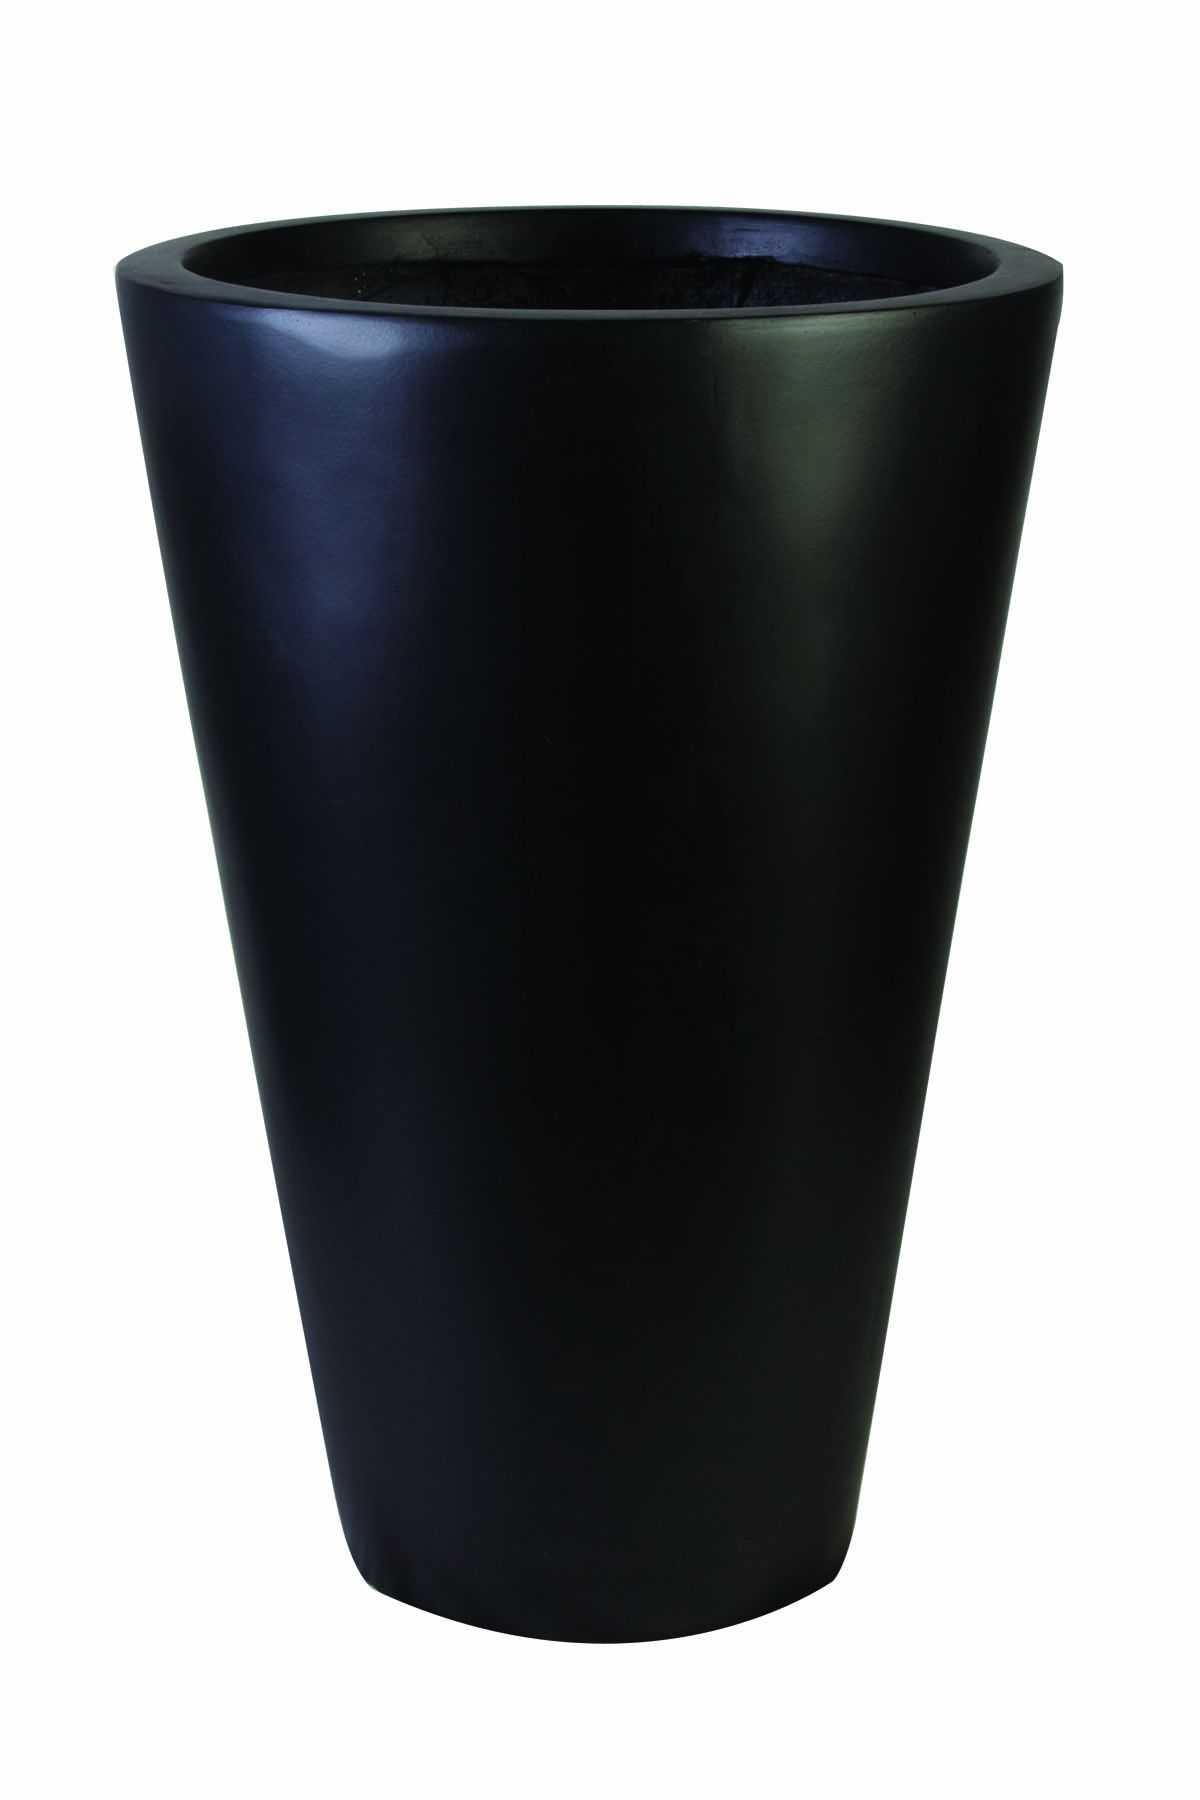 36" Cylan Vase - Click Image to Close